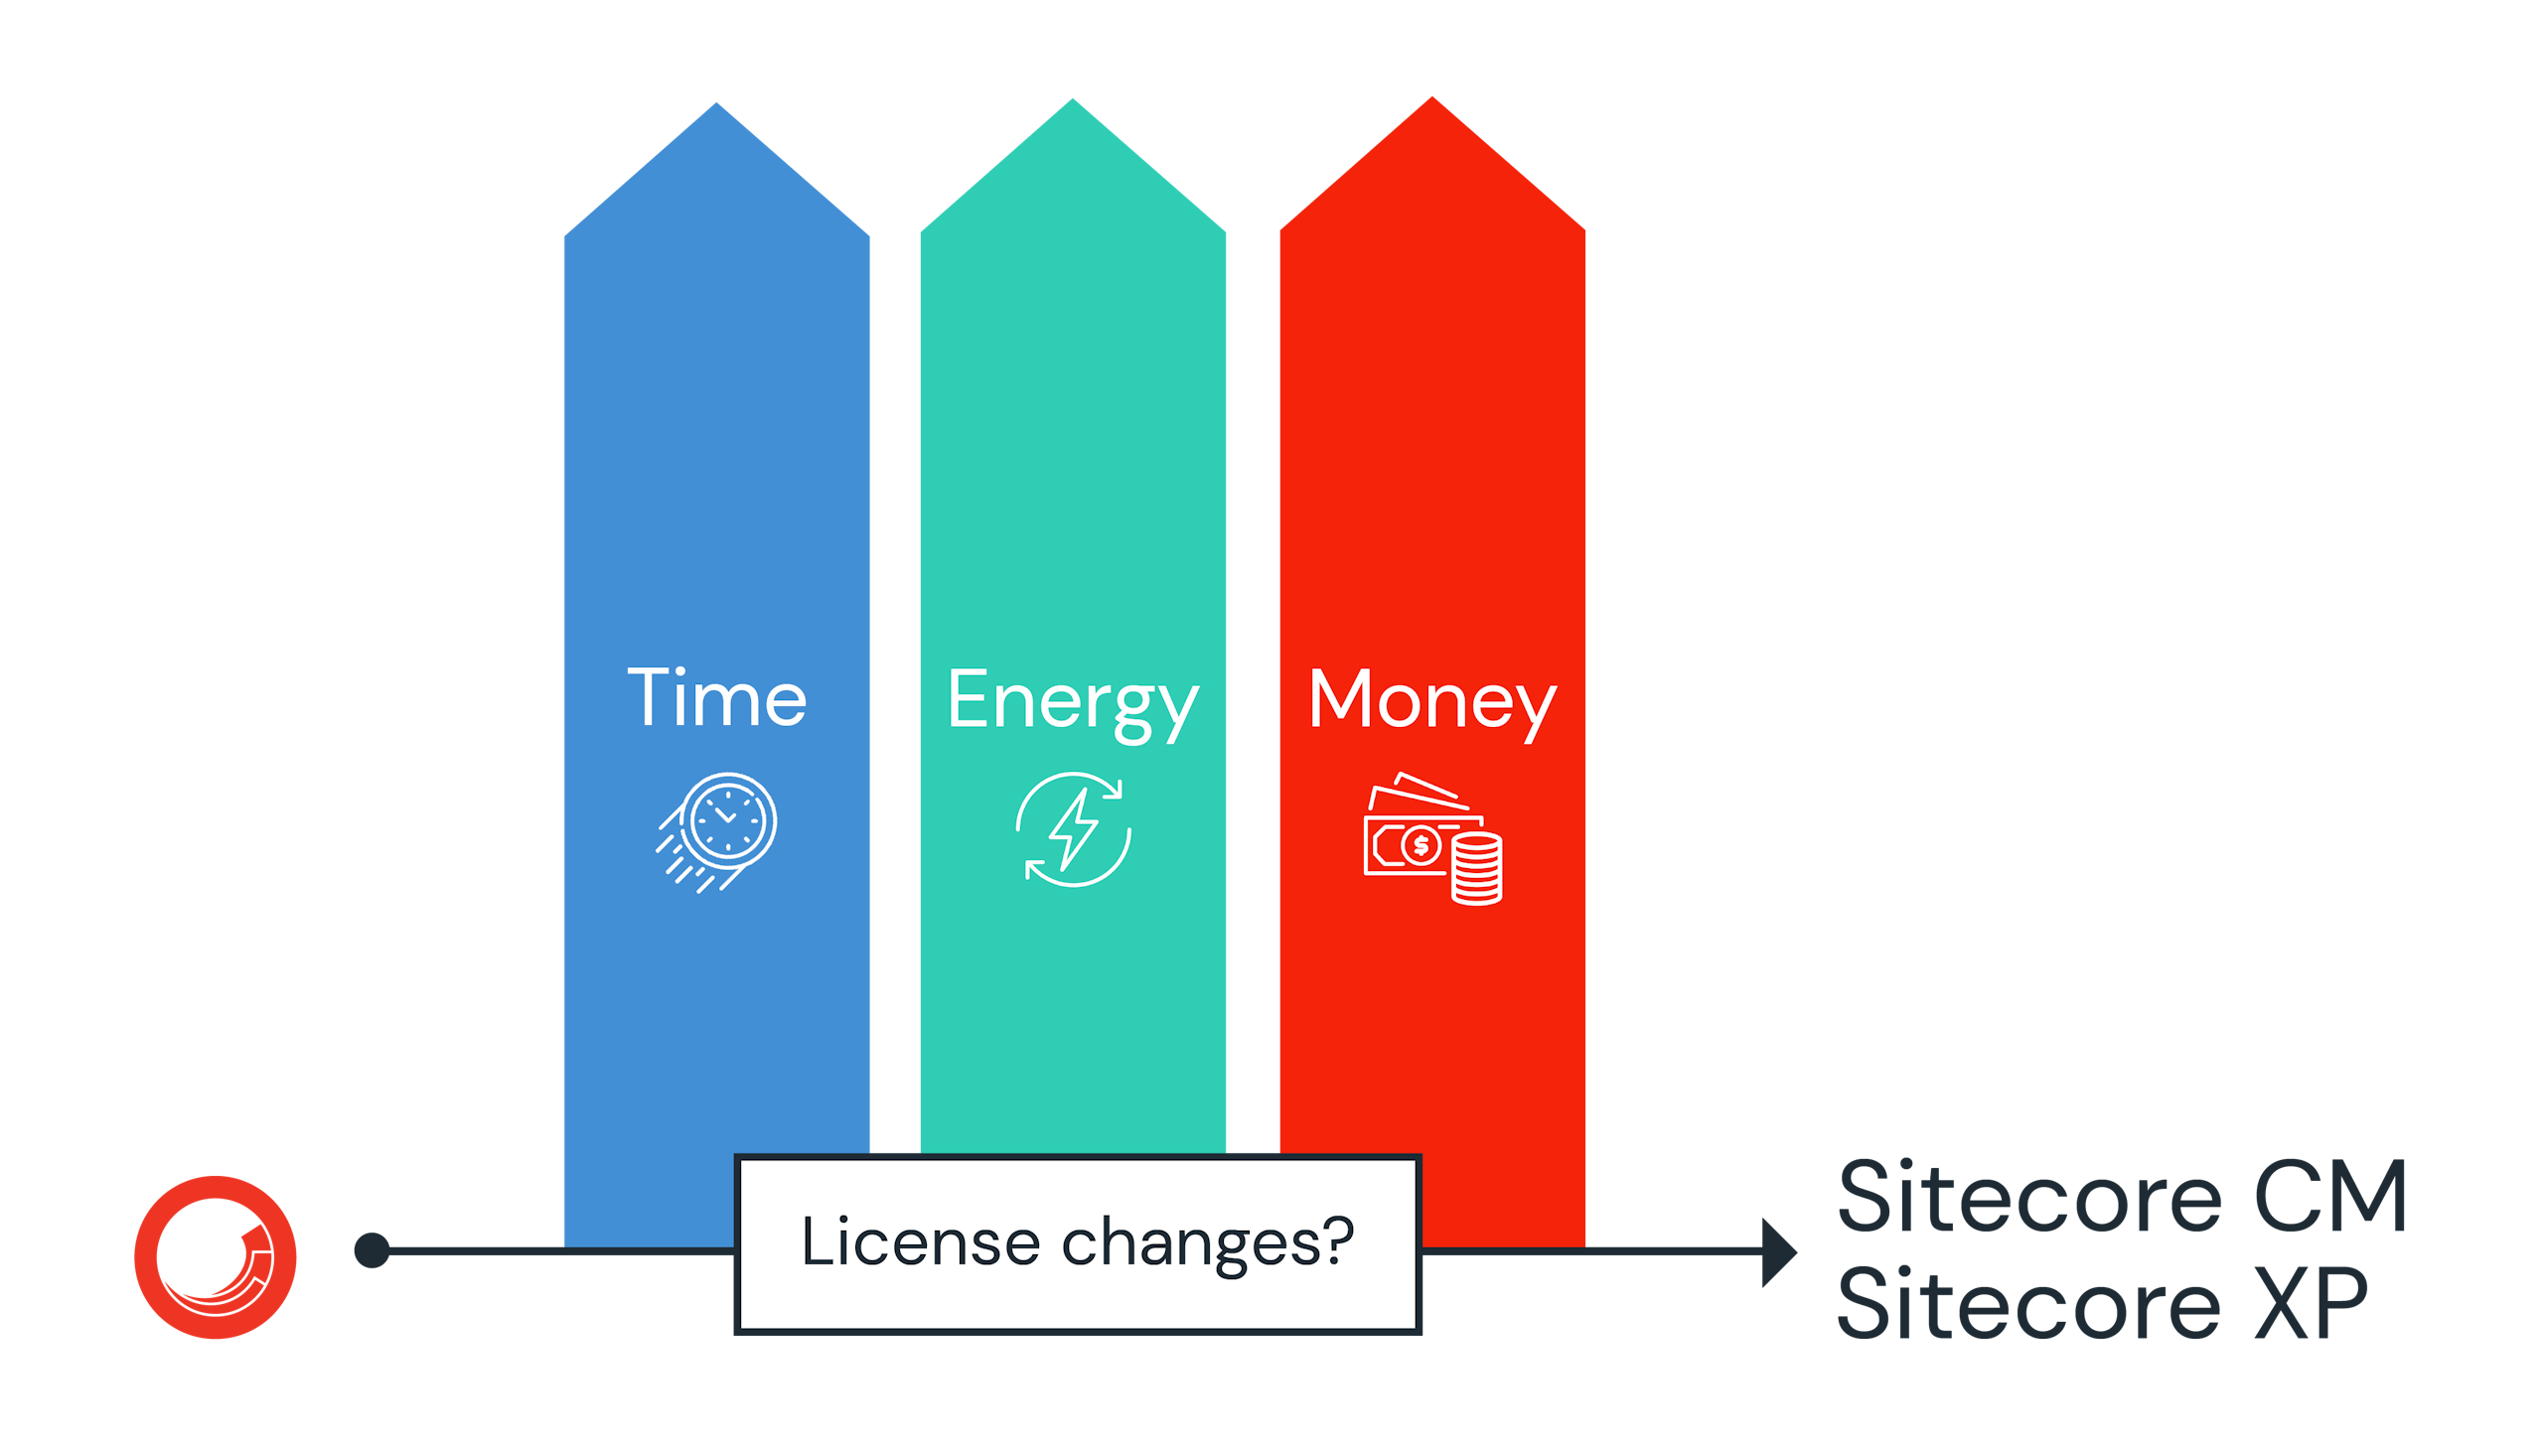 Sitecore license change, is it worth it?